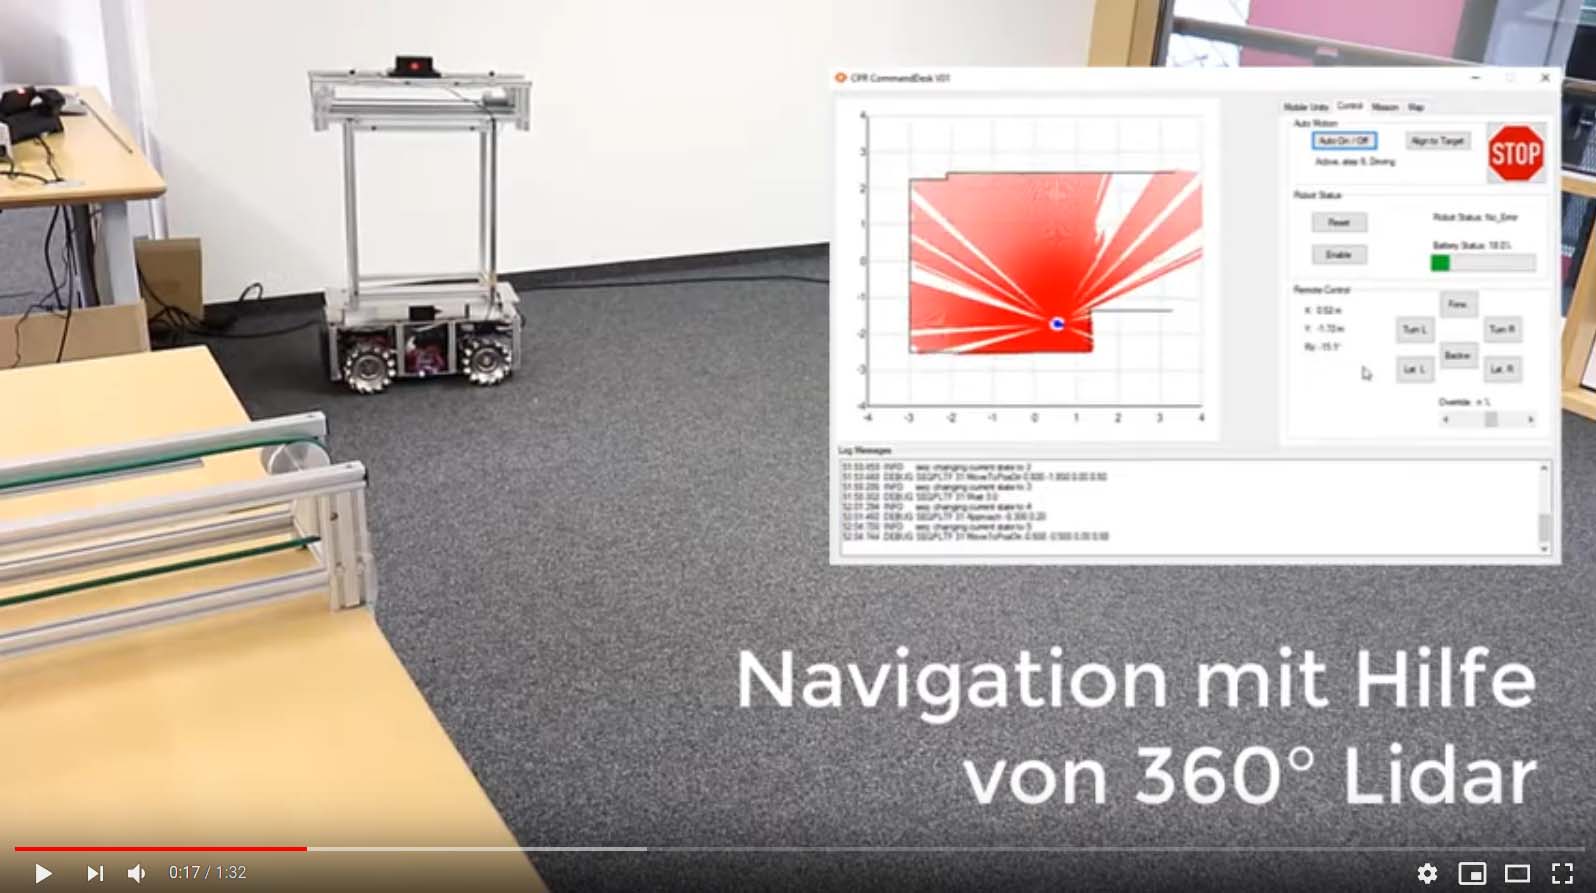 Video: Mobile Platform with Conveyor